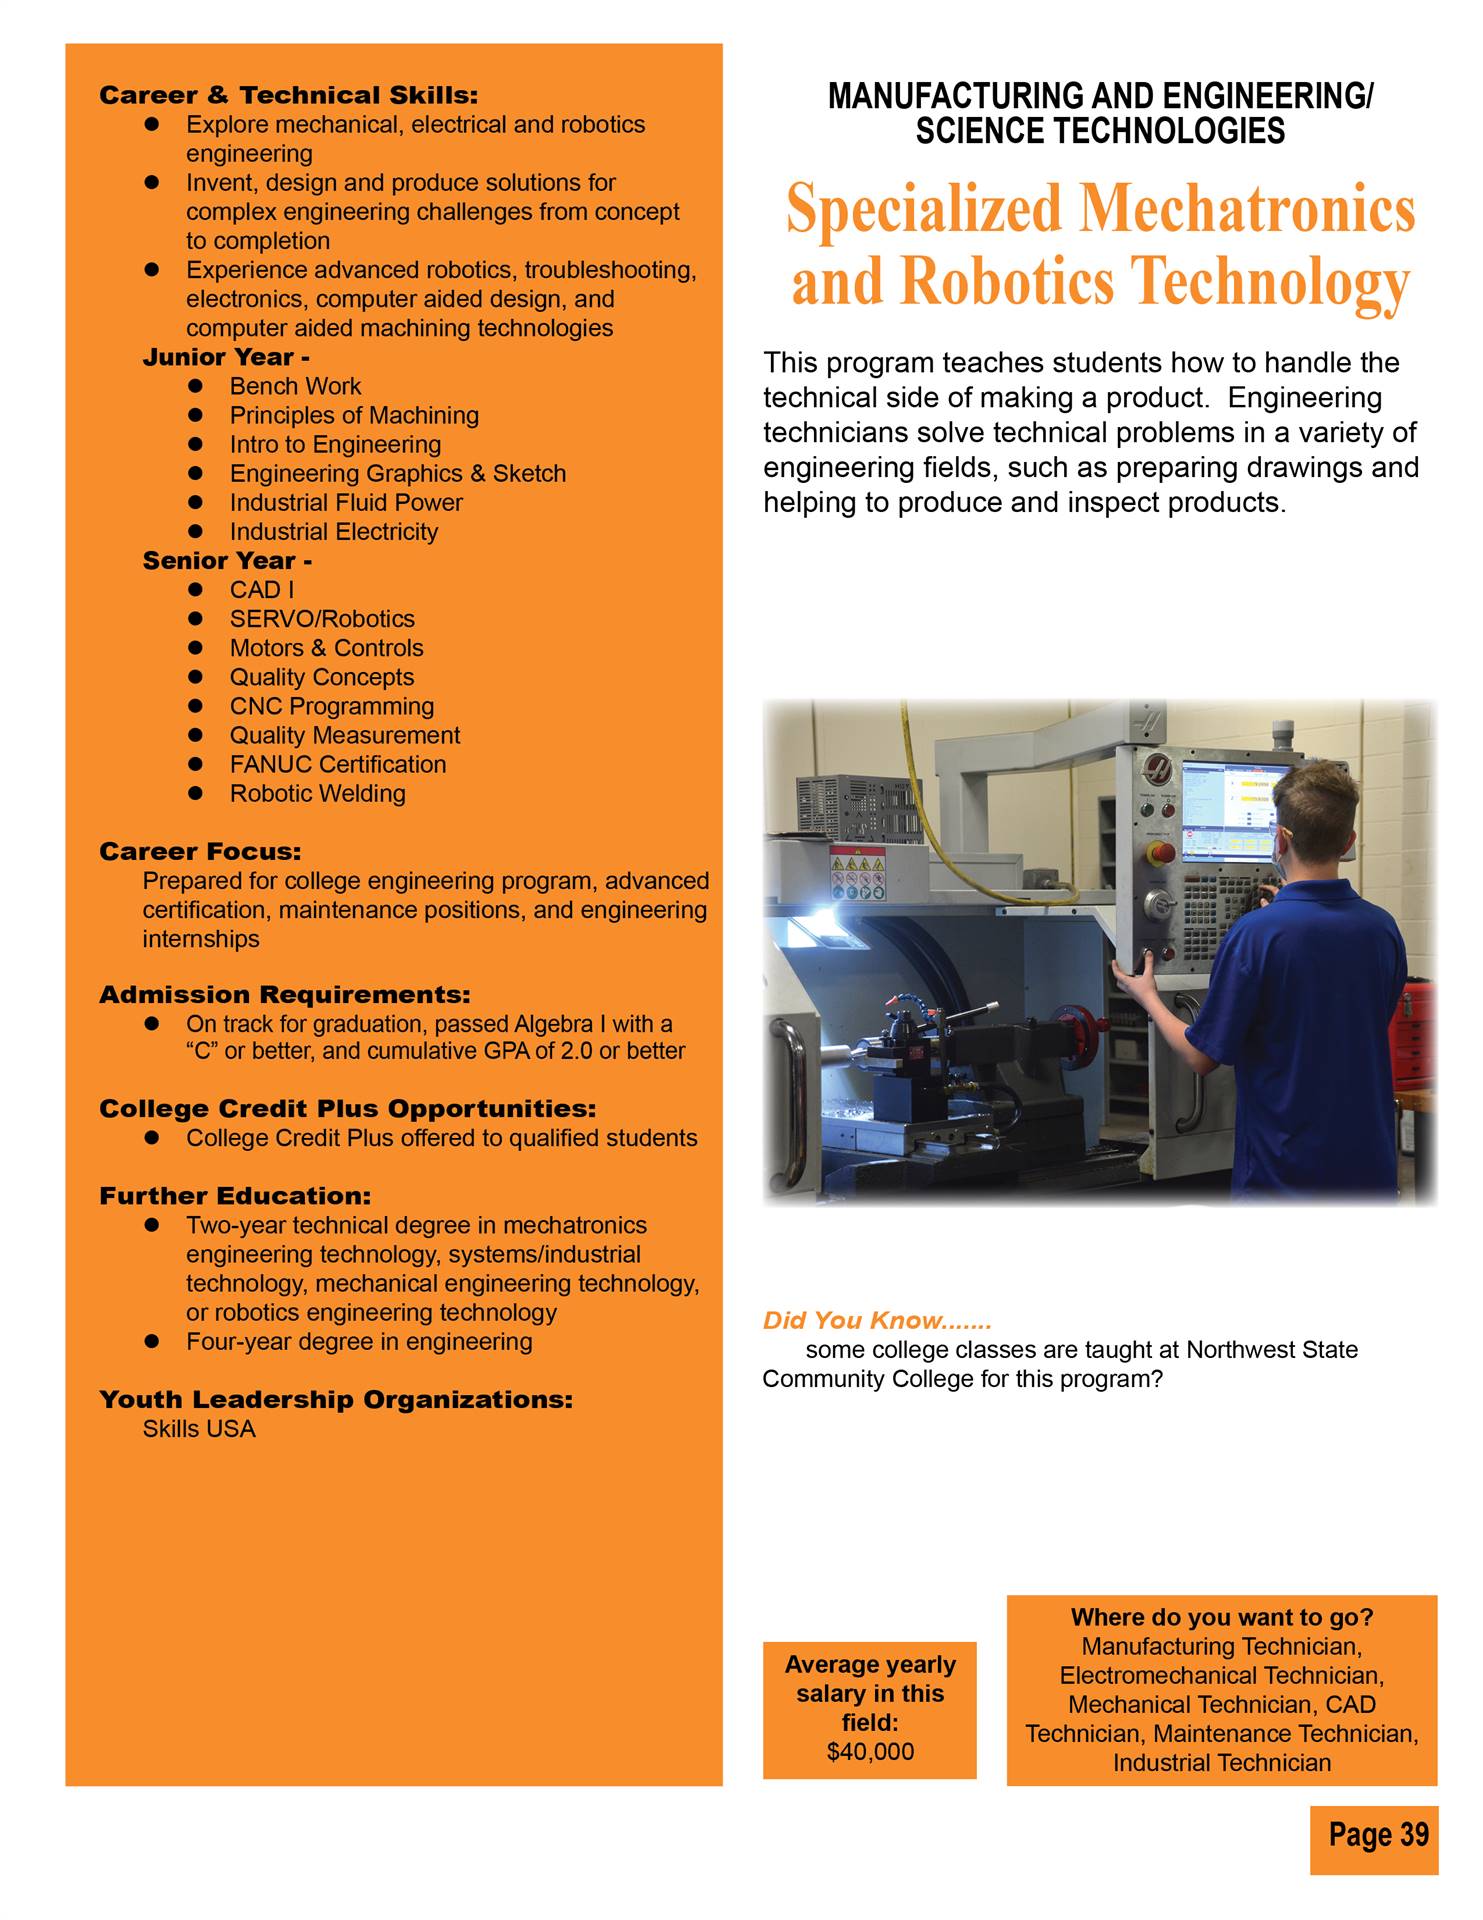 Specialized Mechatronics & Robotics Technology